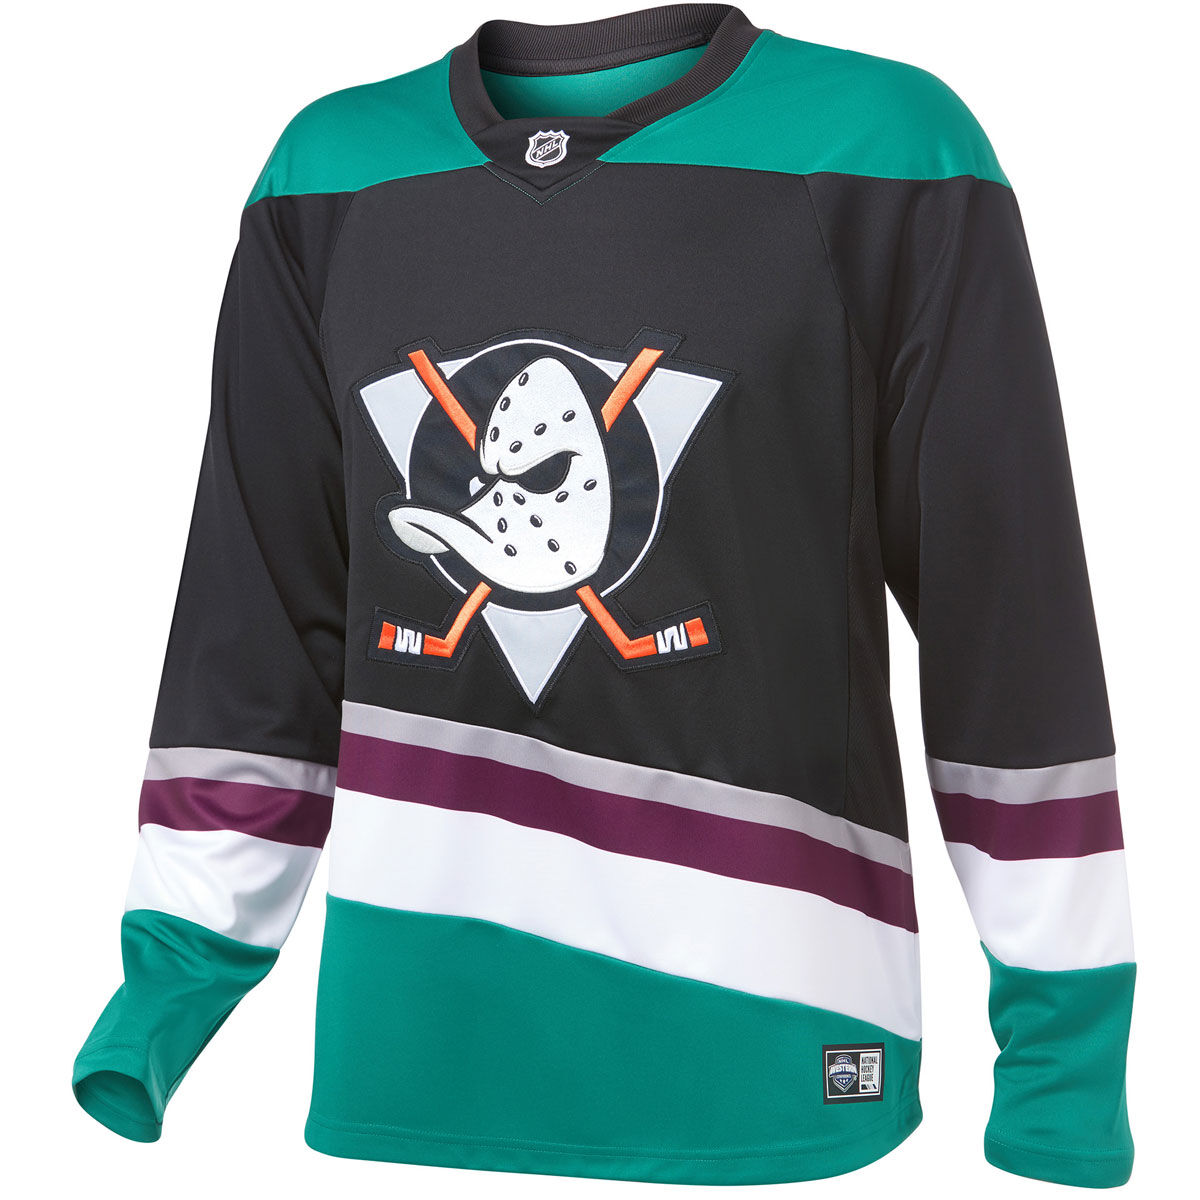 Mighty Ducks of Anaheim authentic team practice jersey